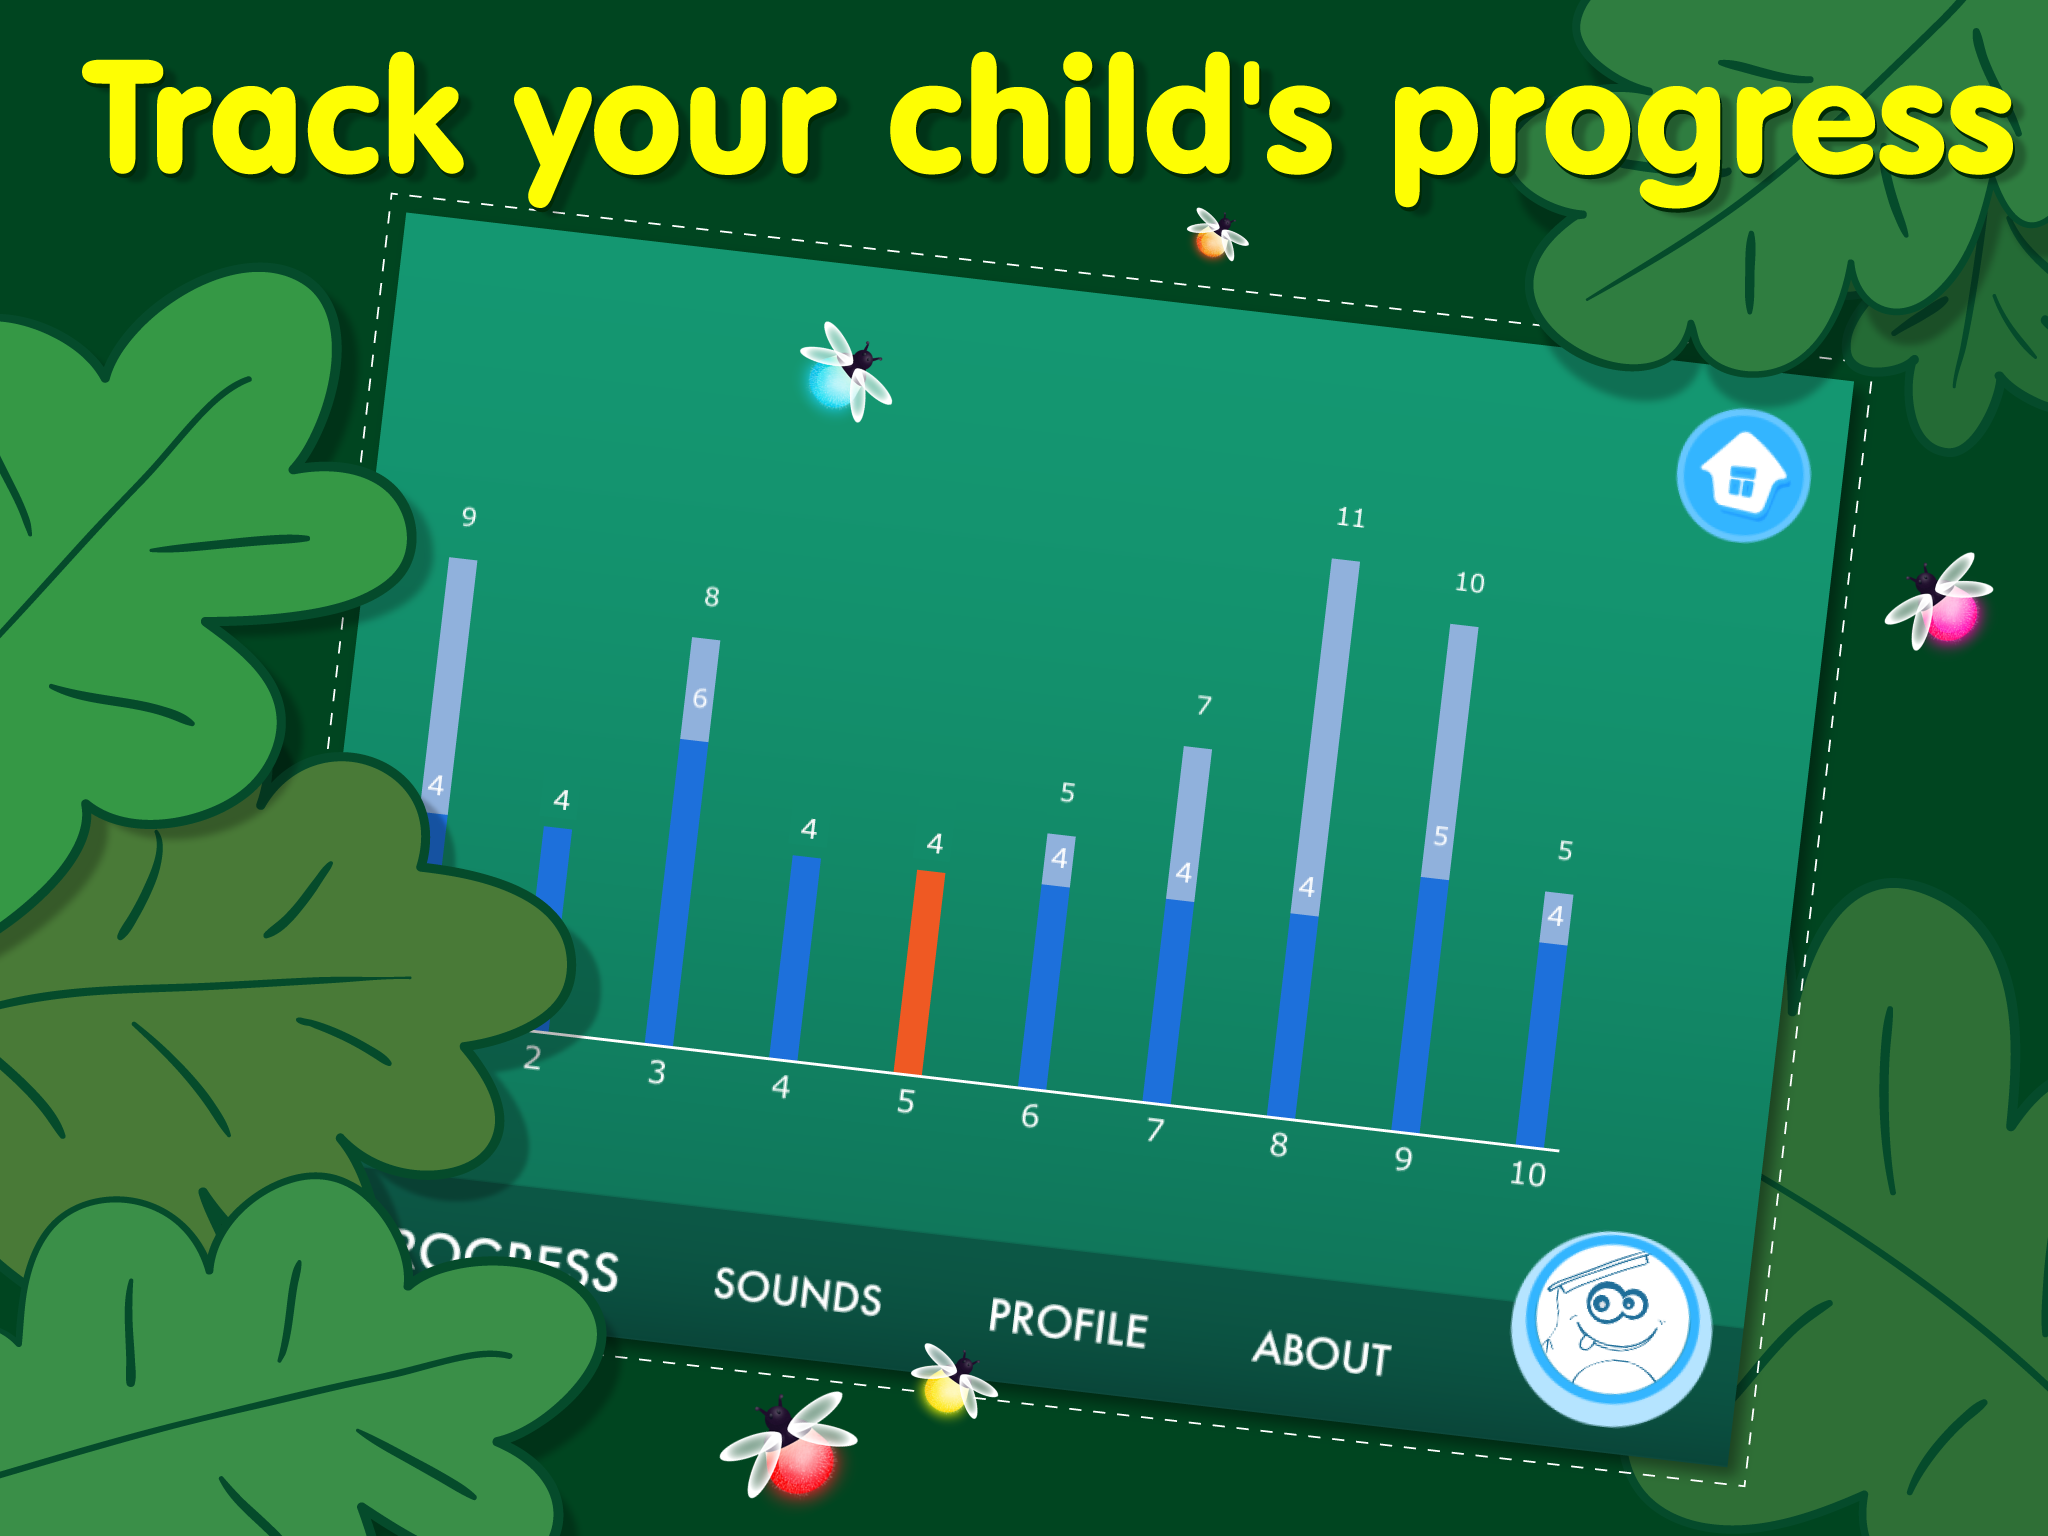 Track your child's progress